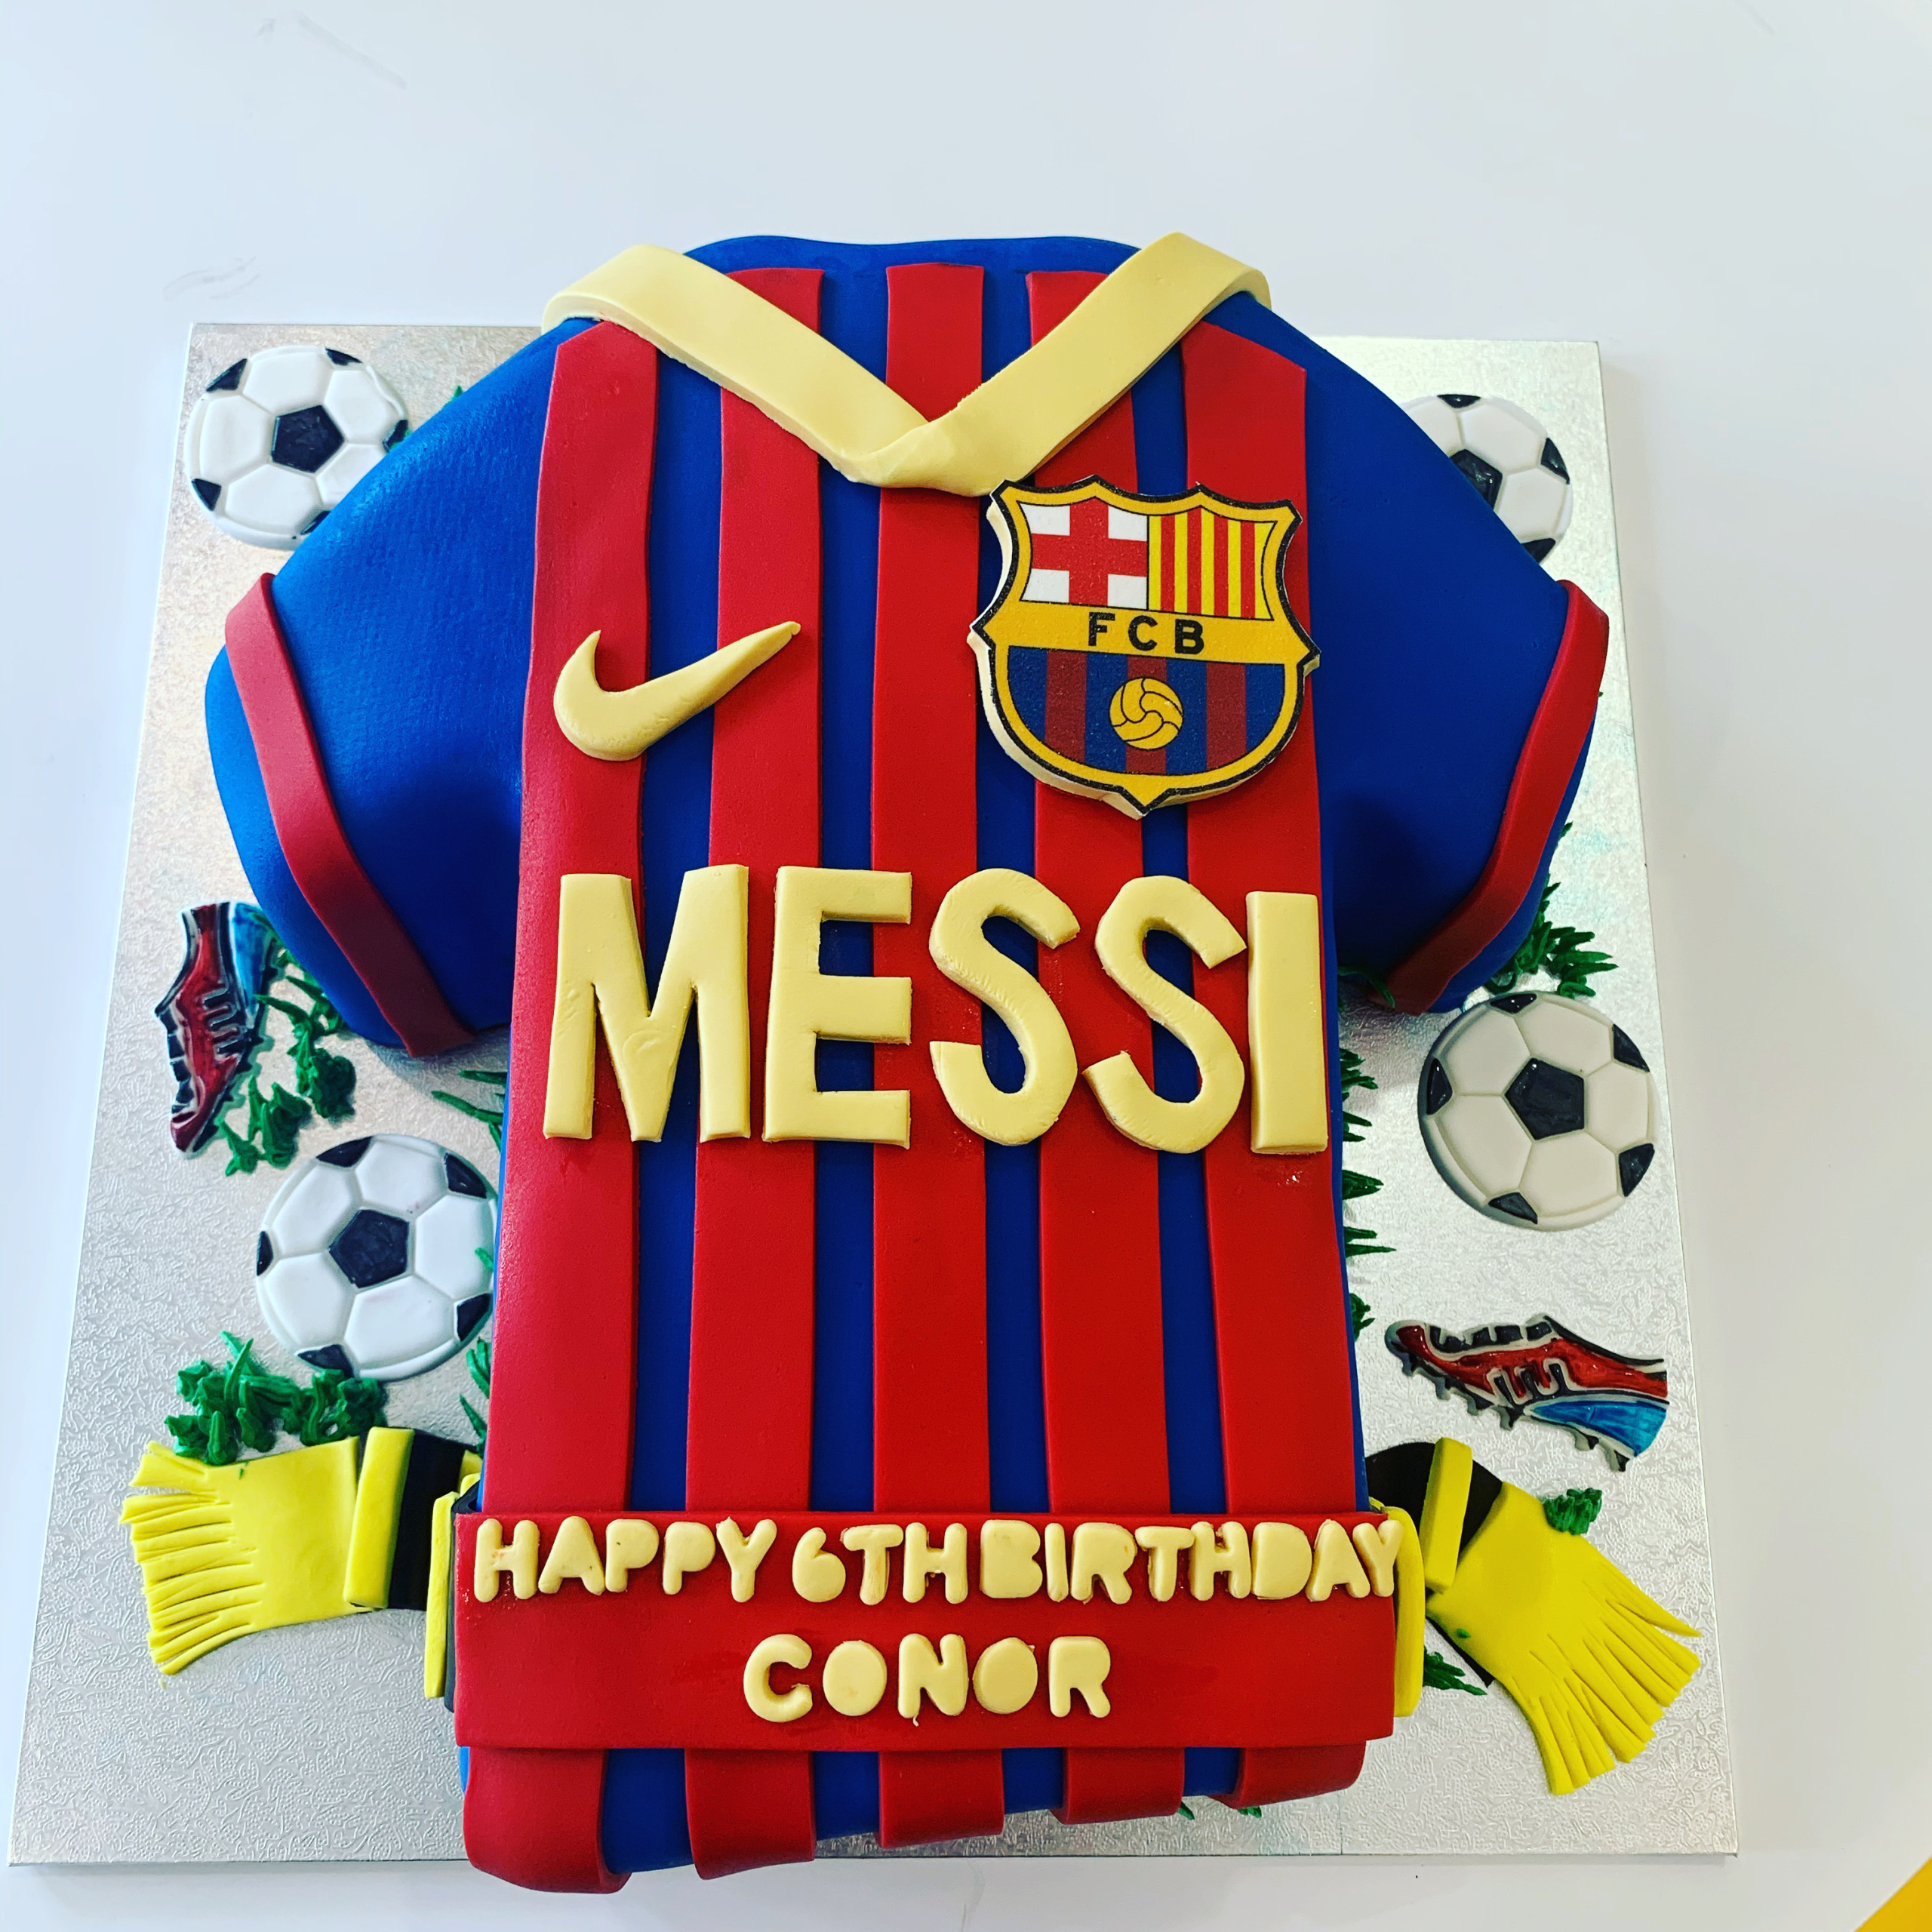 Gâteau d'anniversaire thème barça 🥰🥰 #barça #barcelone #barcelona  #barçacake #cakebarça #cakebirthday #cakedesign #cakedecorating | Instagram